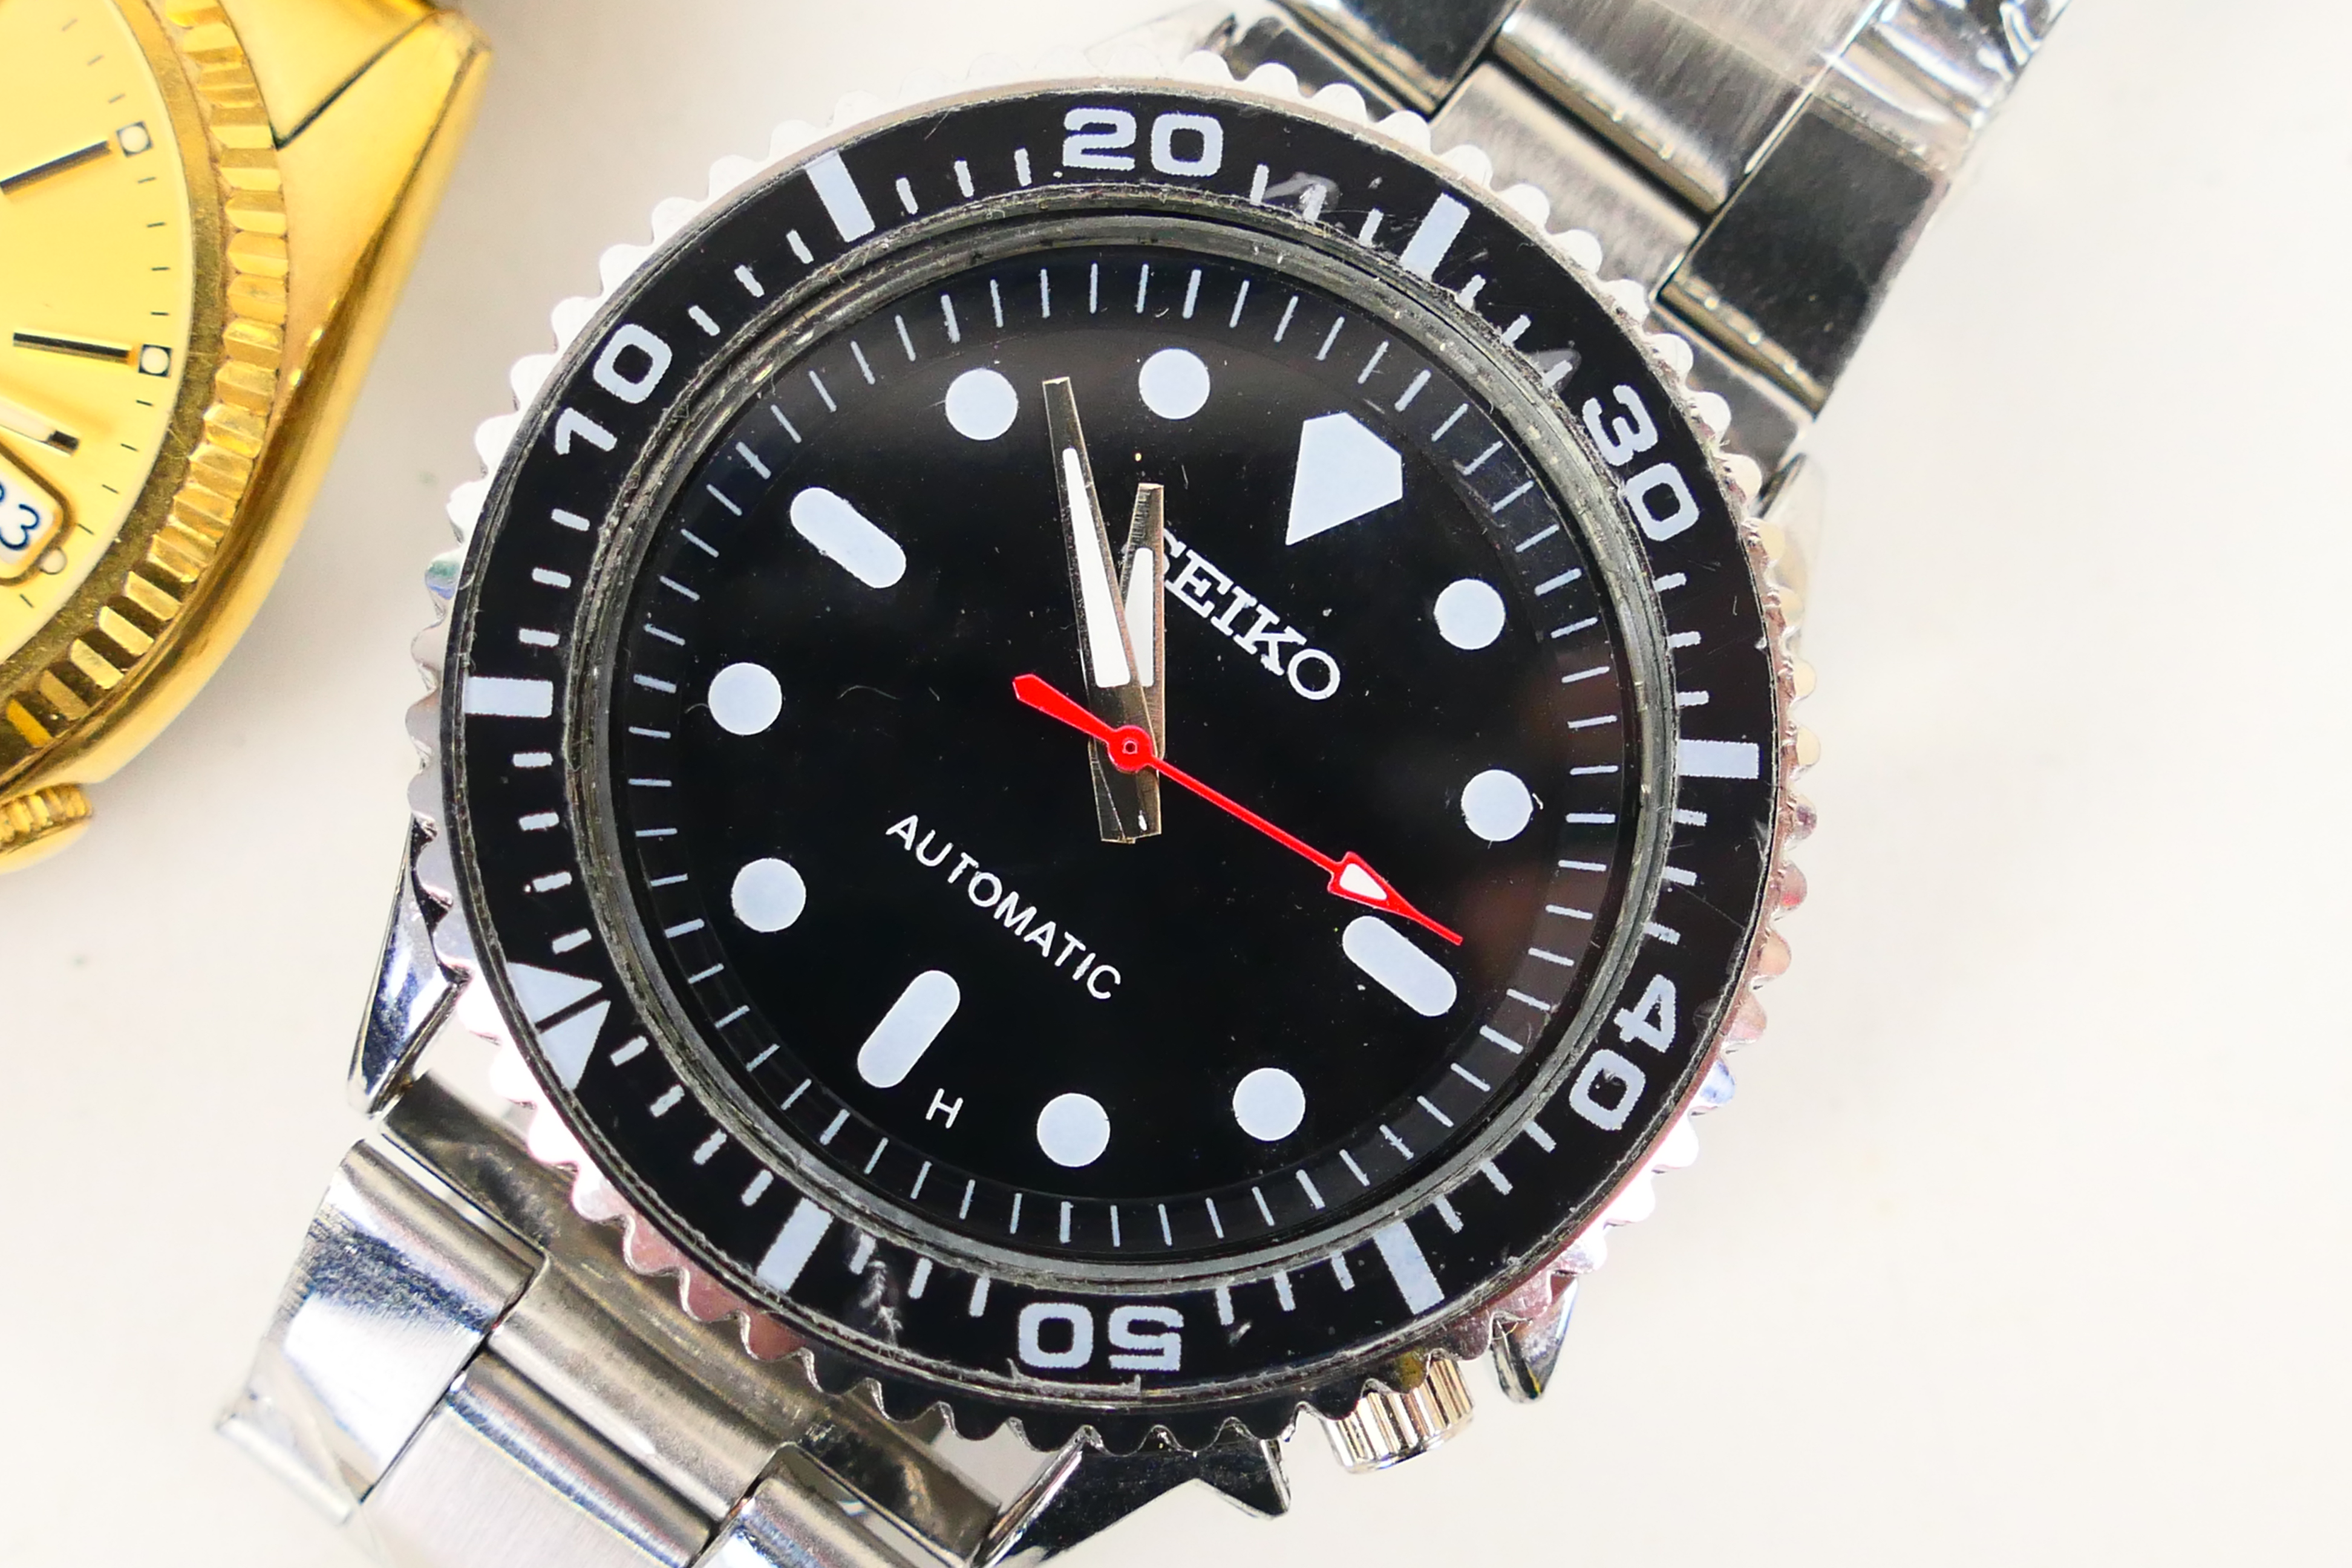 A Seiko 5 Automatic wrist watch 7S26 311 - Image 3 of 6